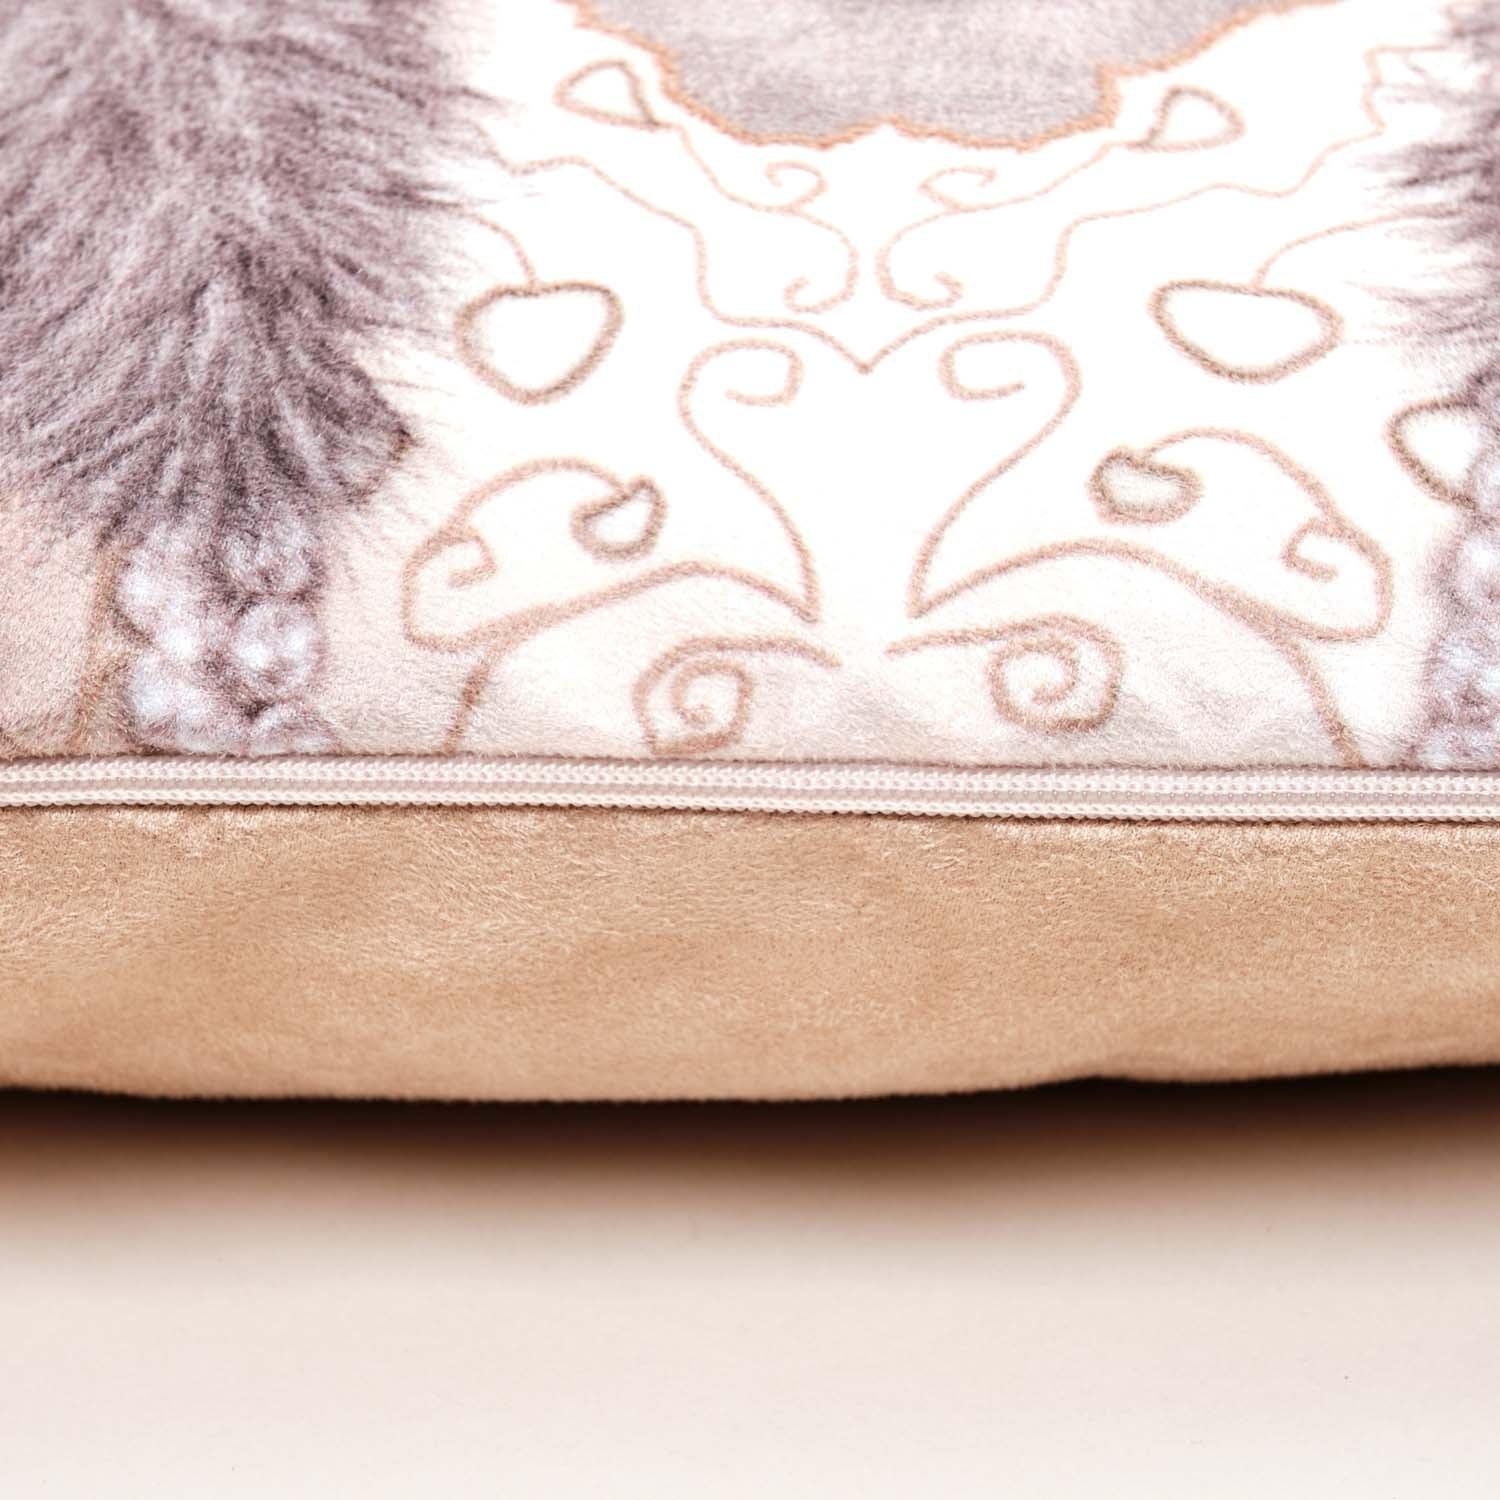 Gurl - Pets Rock Cushion - Handmade Cushions UK - WeLoveCushions